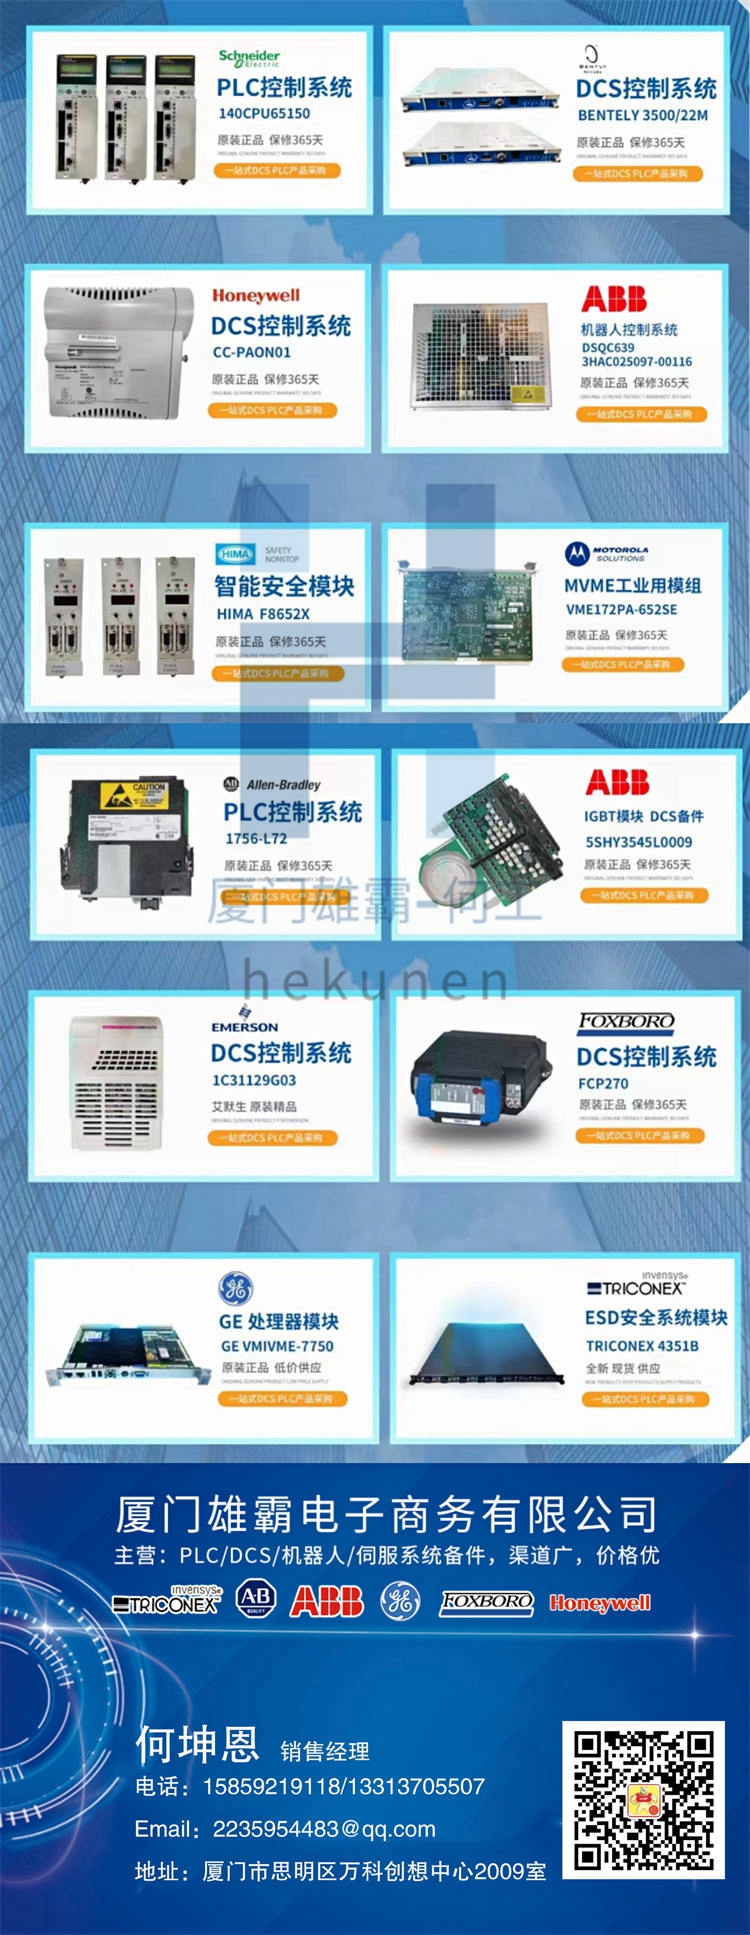 CI855K01 PLC控制器ABB 输入输出模块-备件销售 